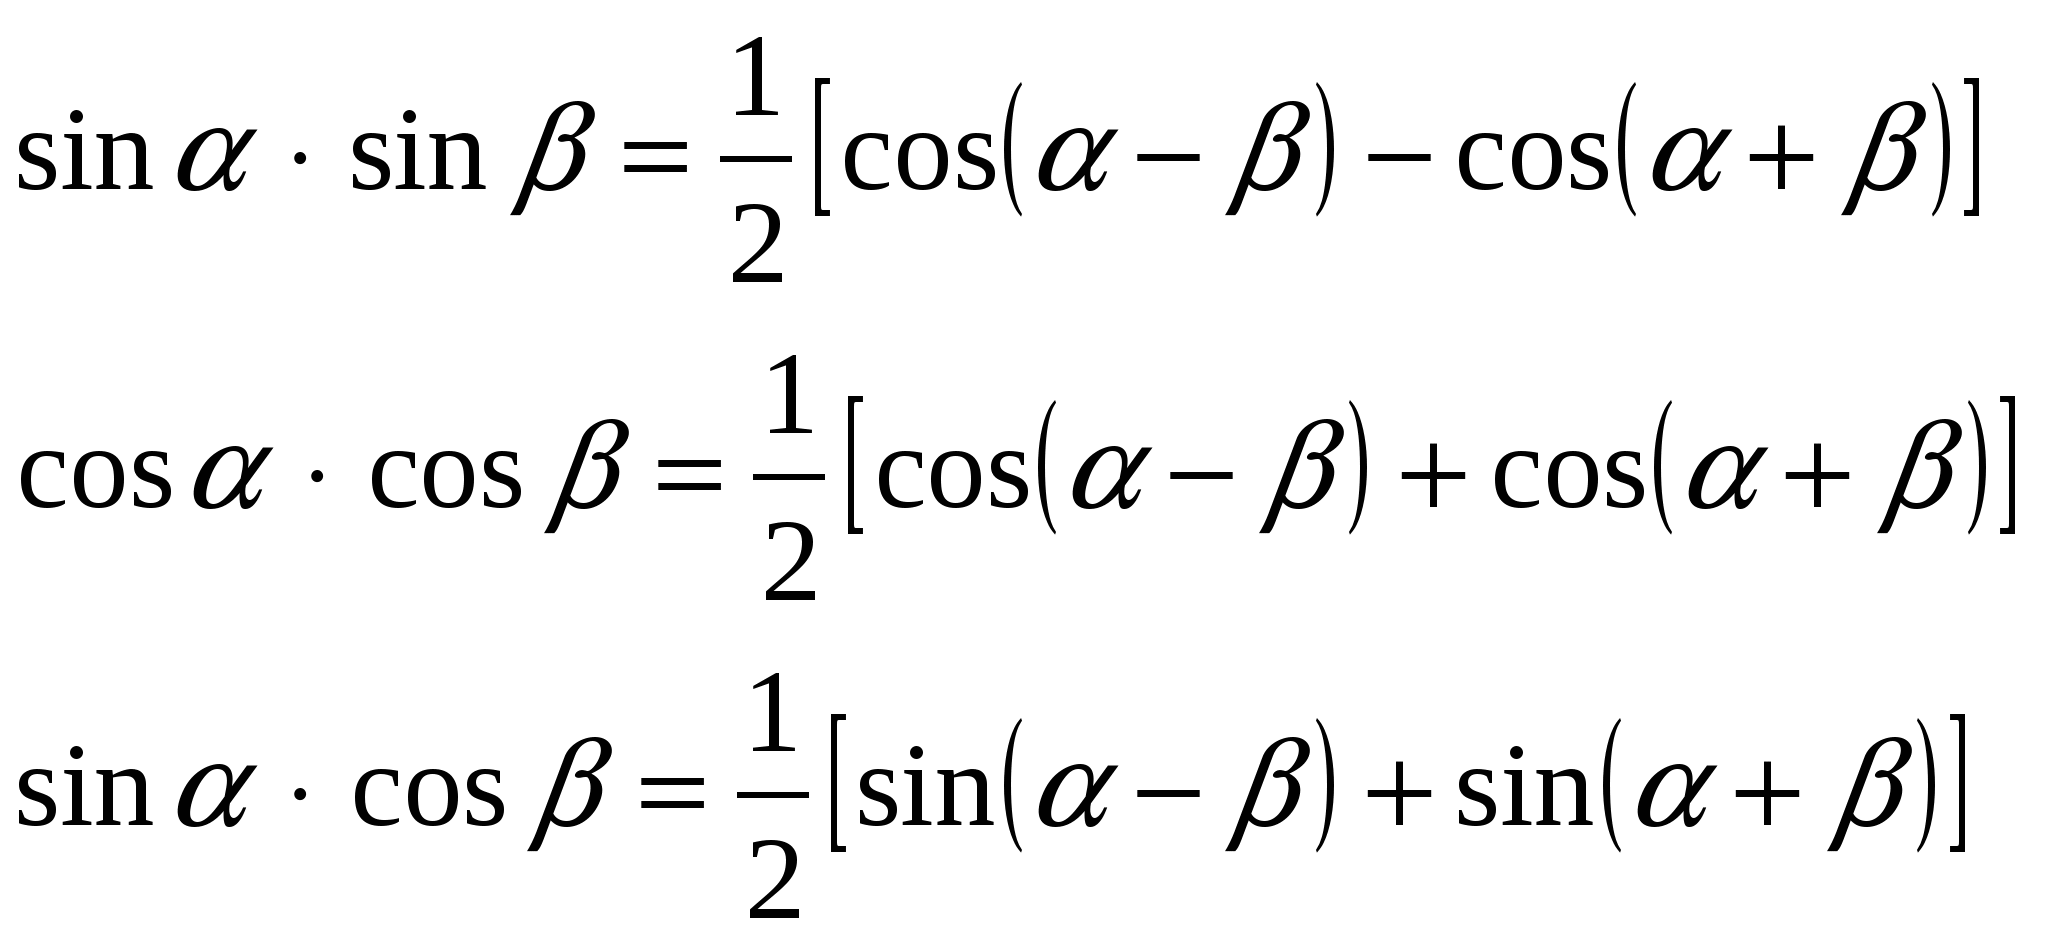 Формулы умножения синусов и косинусов. Произведение синусов и косинусов формулы. Формула умножения синусов. Формула умножения косинусов.